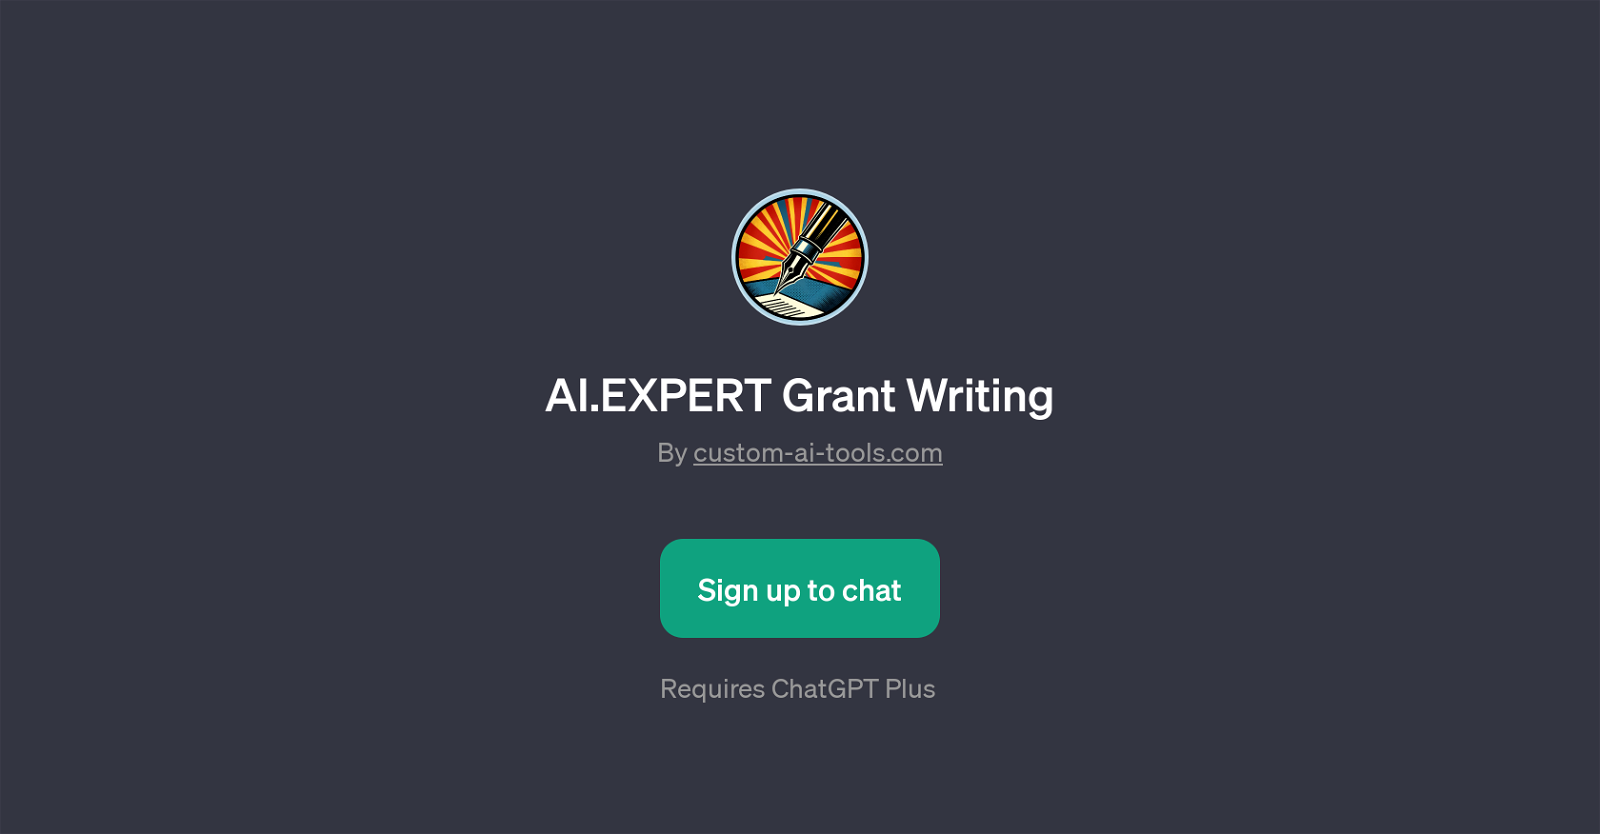 AI.EXPERT Grant Writing website